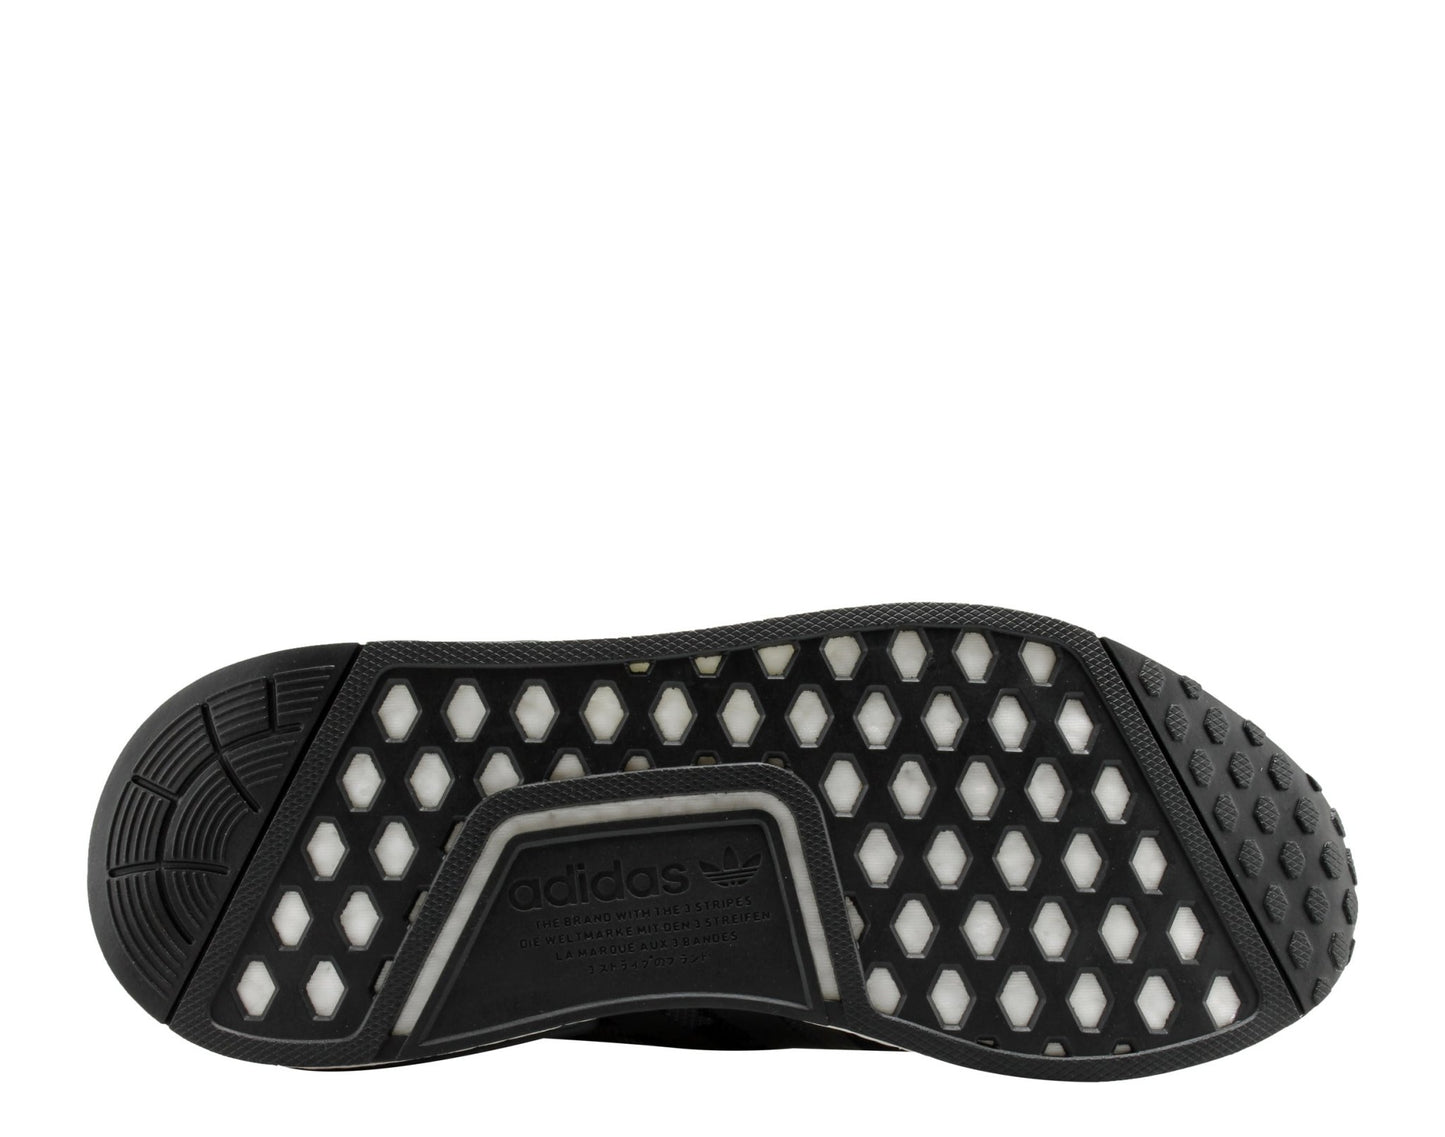 Adidas NMD_R1 Core Black/Grey Duck Camo Men's Running Shoes D96616 - Becauze